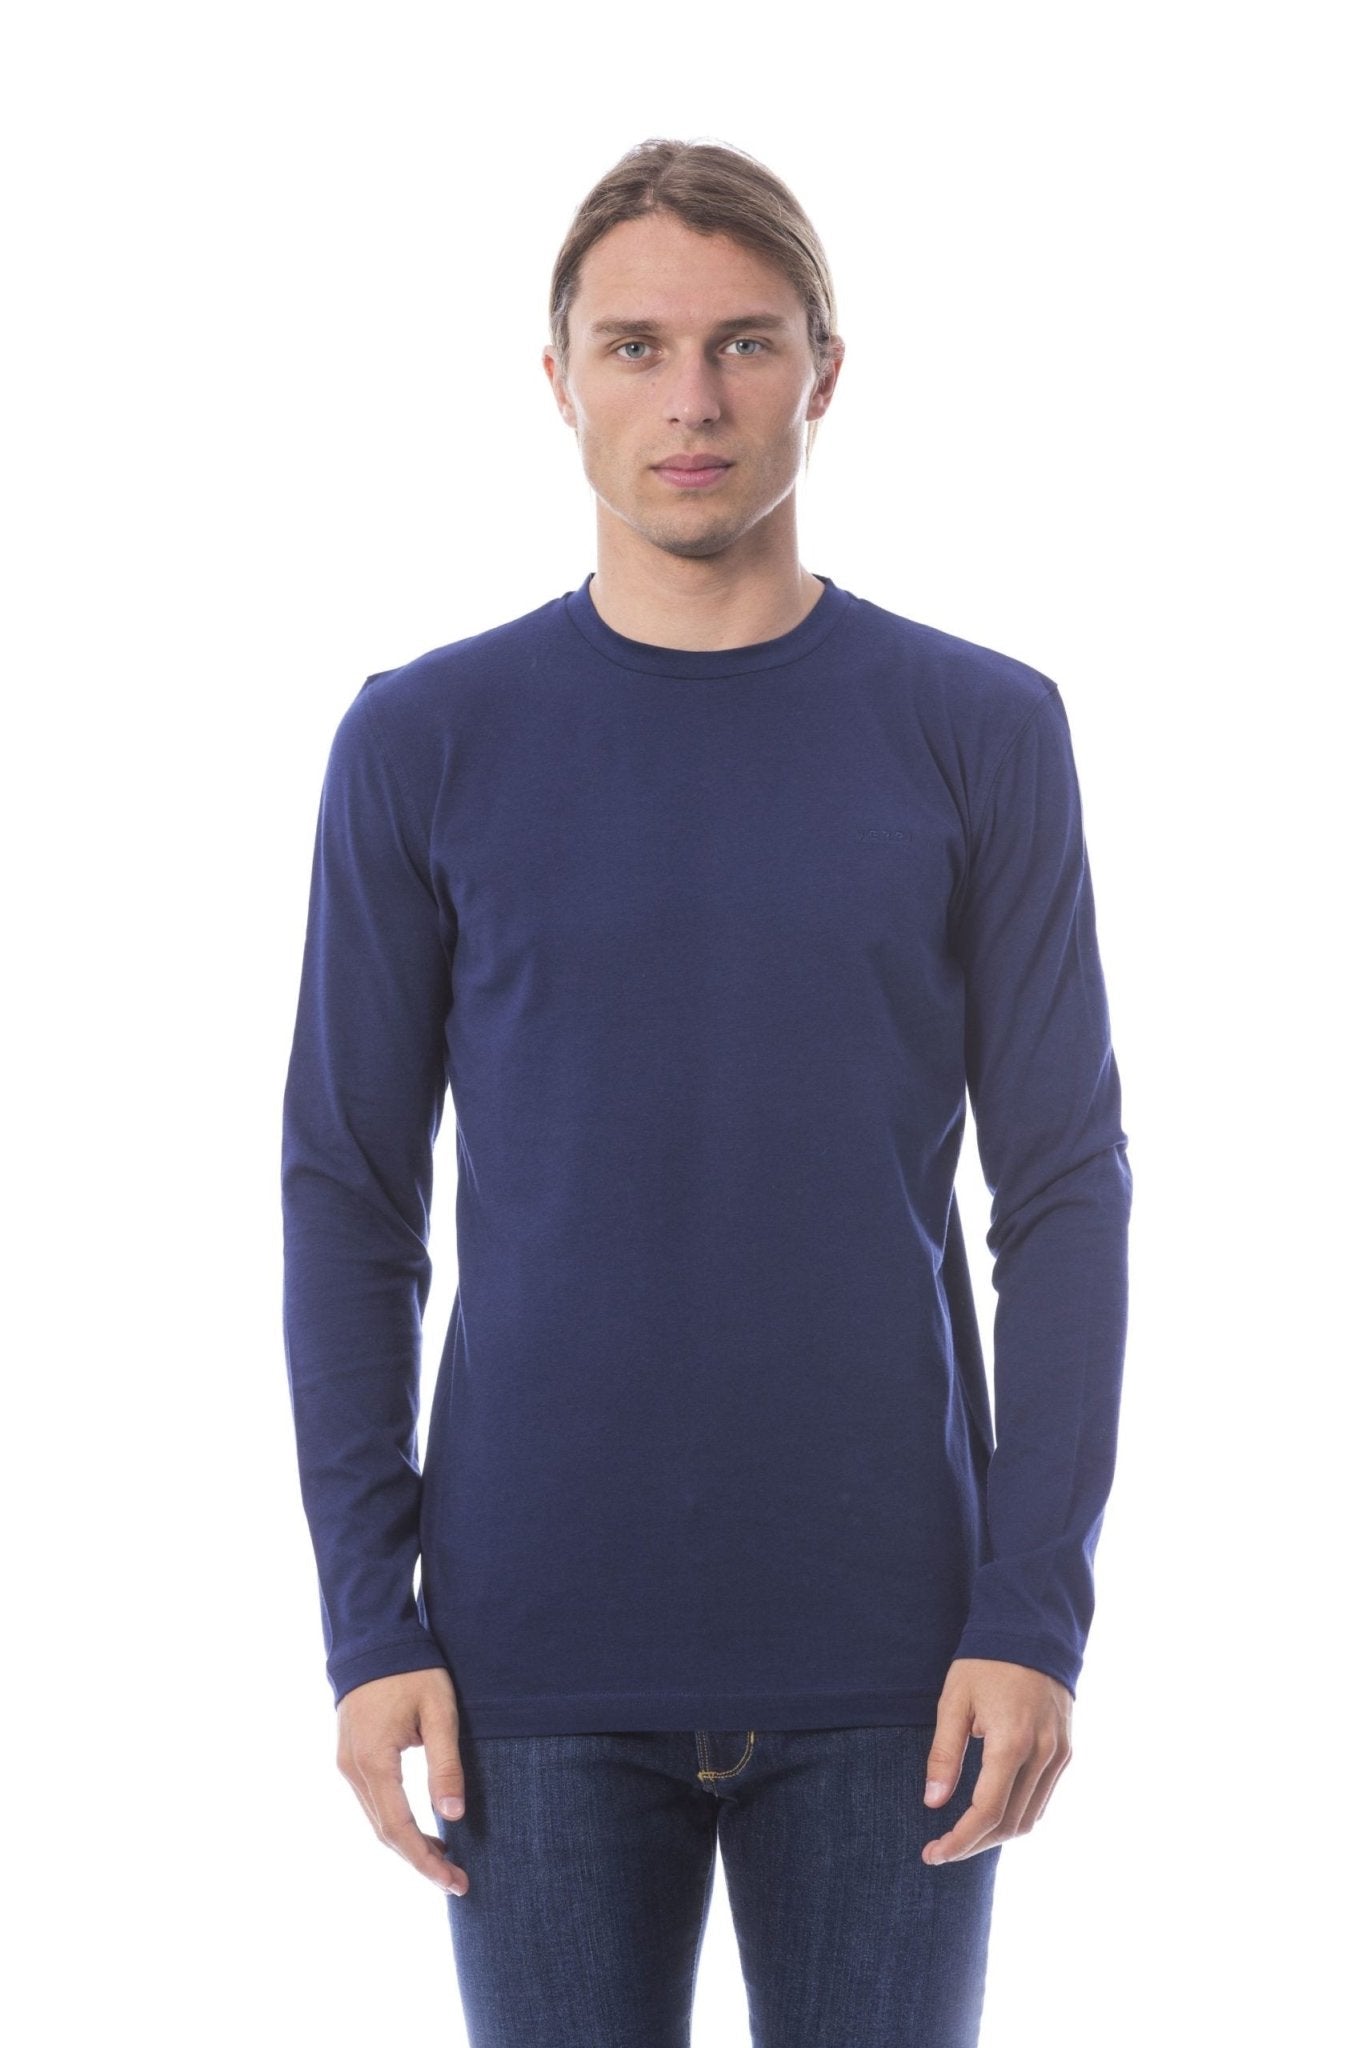 Verri Blue Cotton T-Shirt - Fizigo